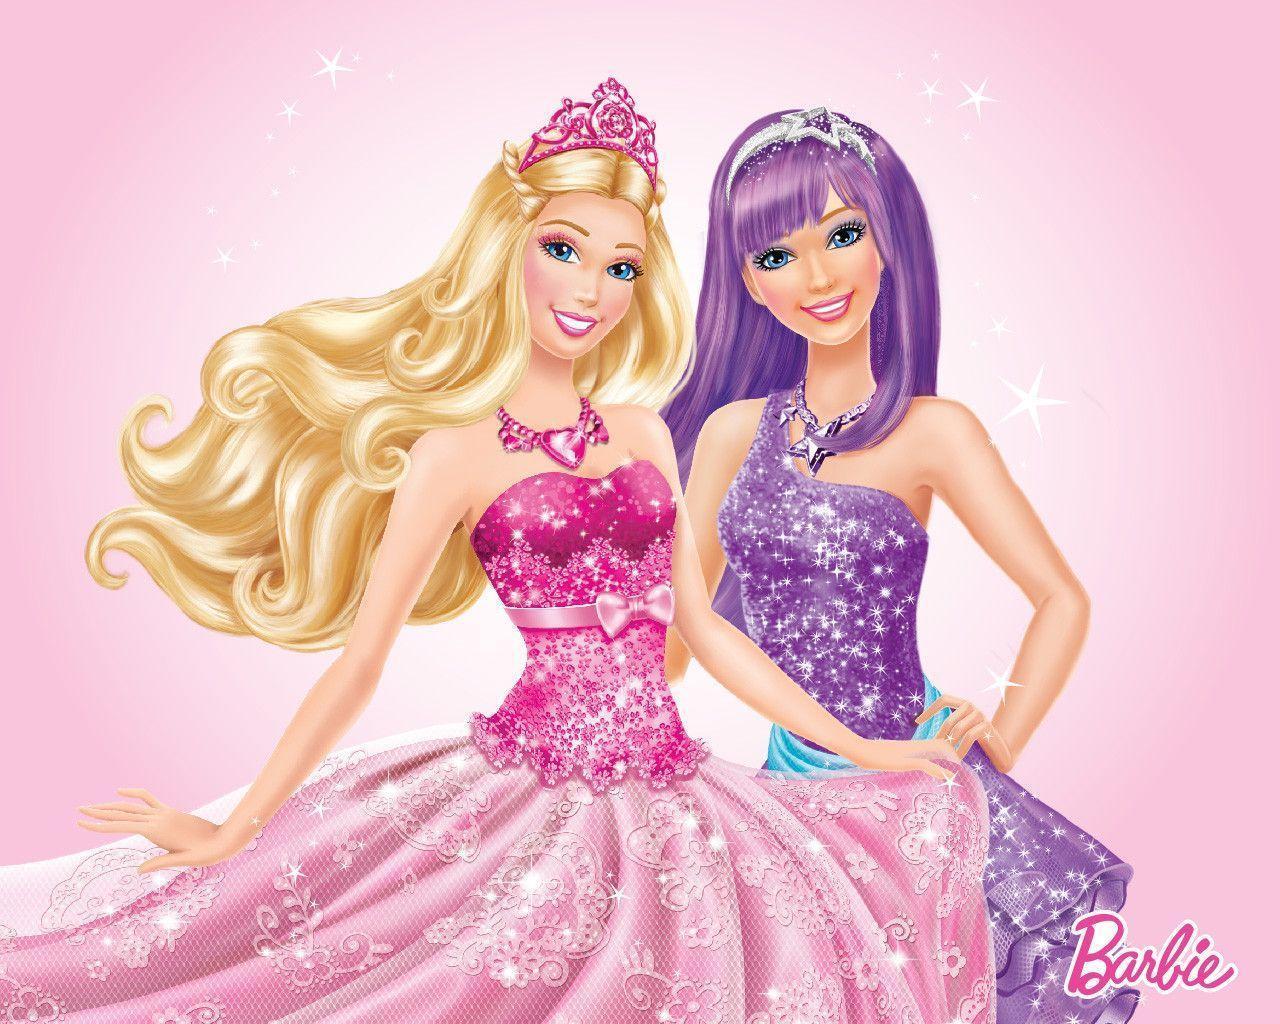 Barbie Princess The Pop Star Movies Wallpaper 1280x1024PX